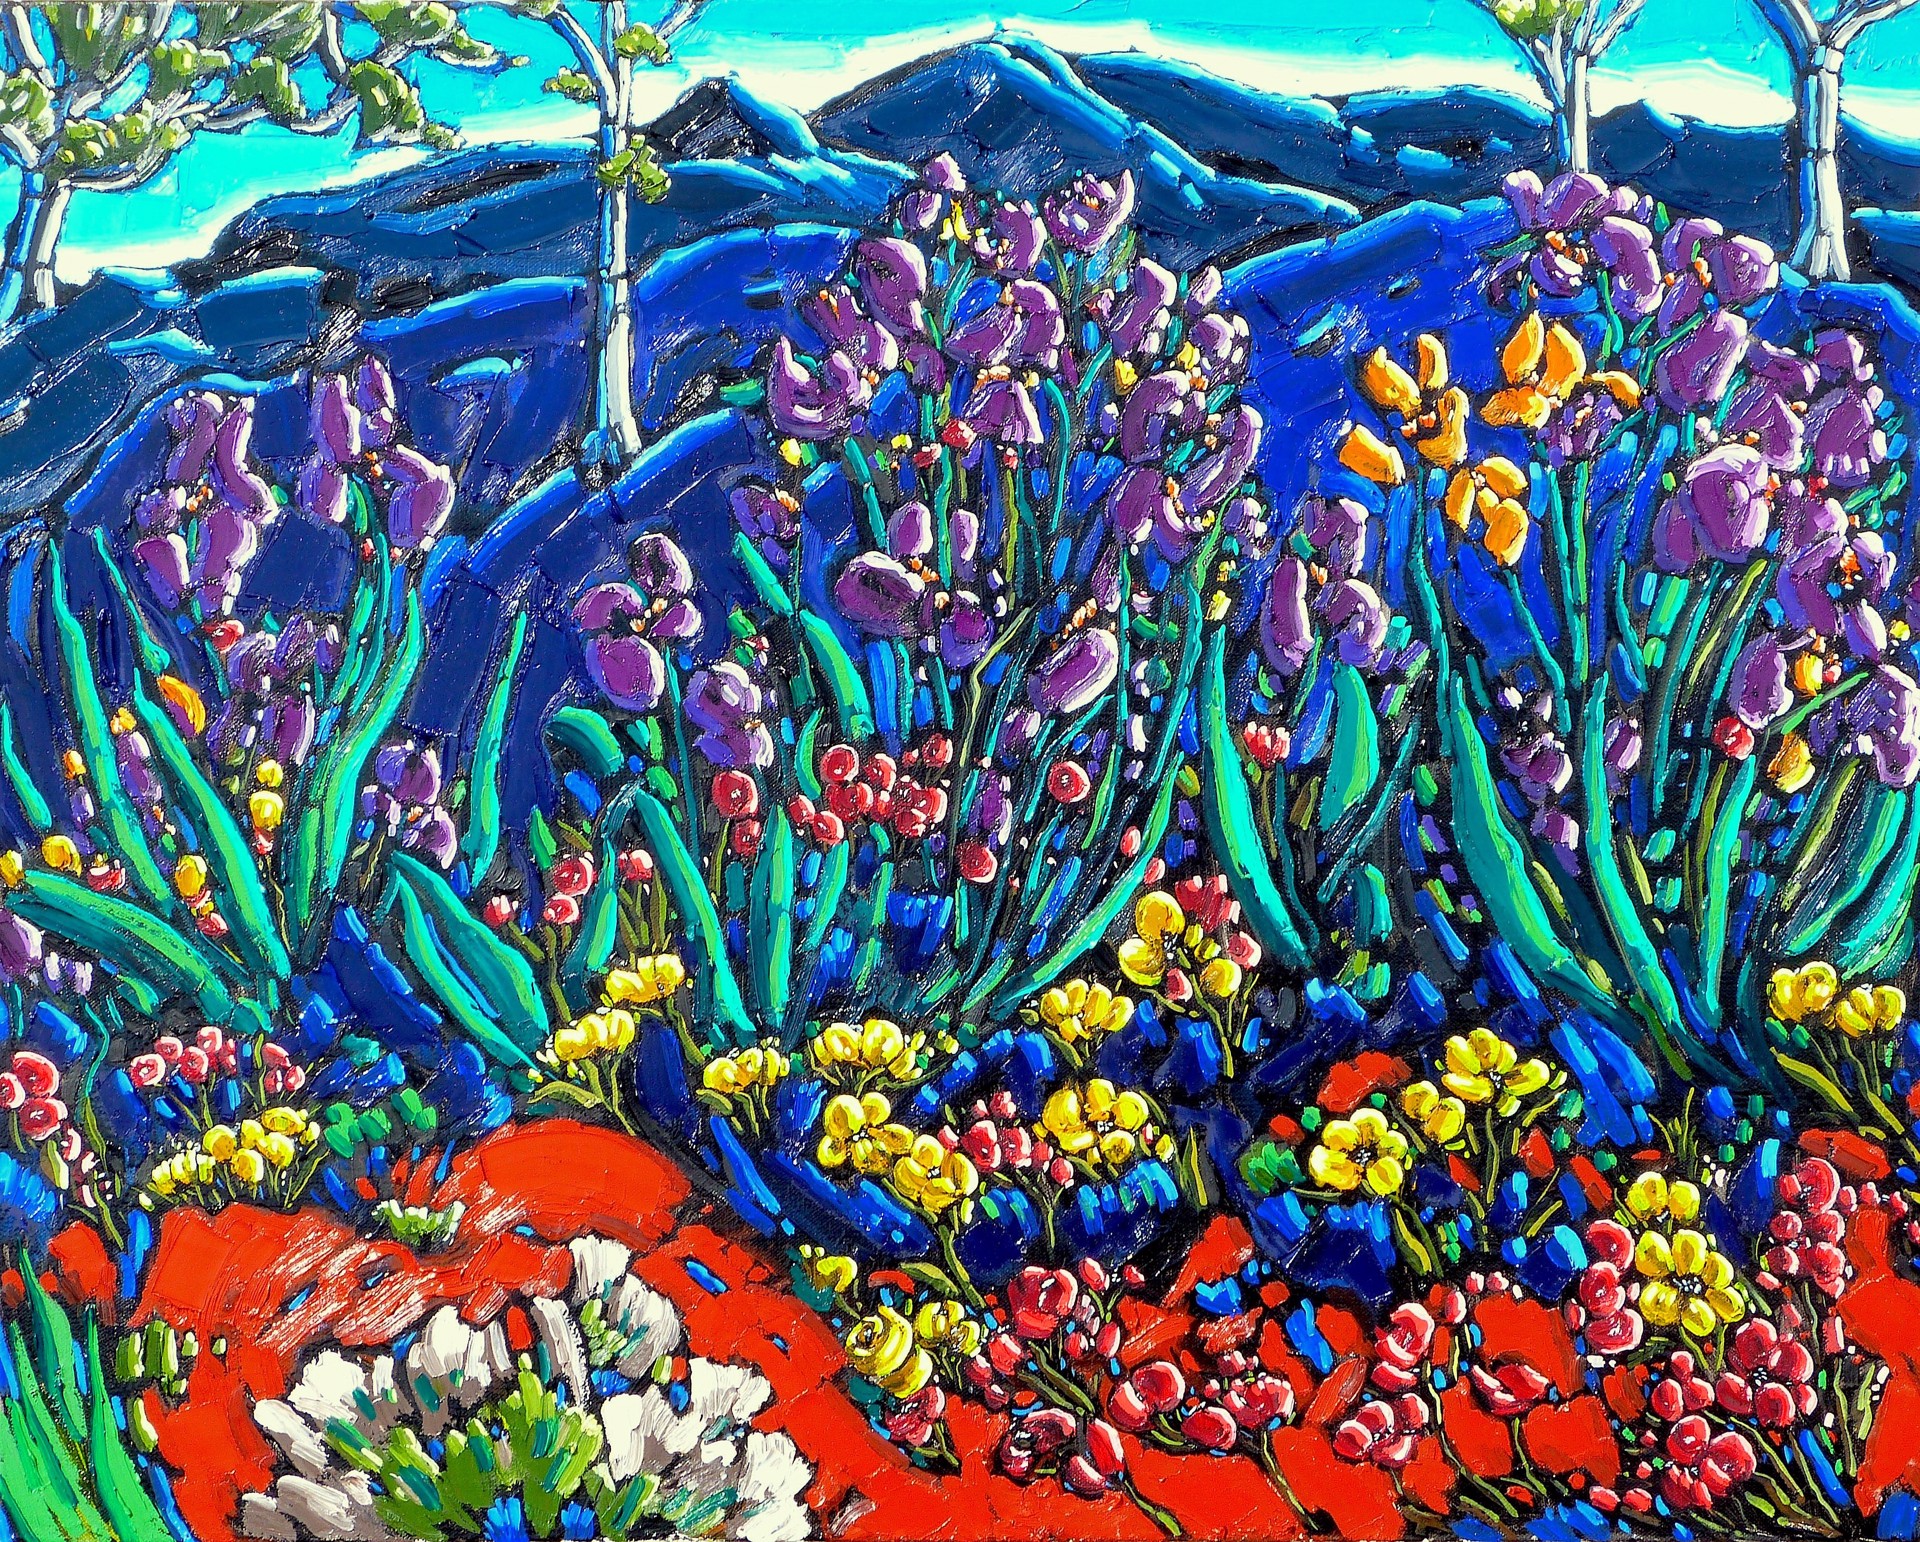 Homage to Van Gogh - Irises by Neil Myers